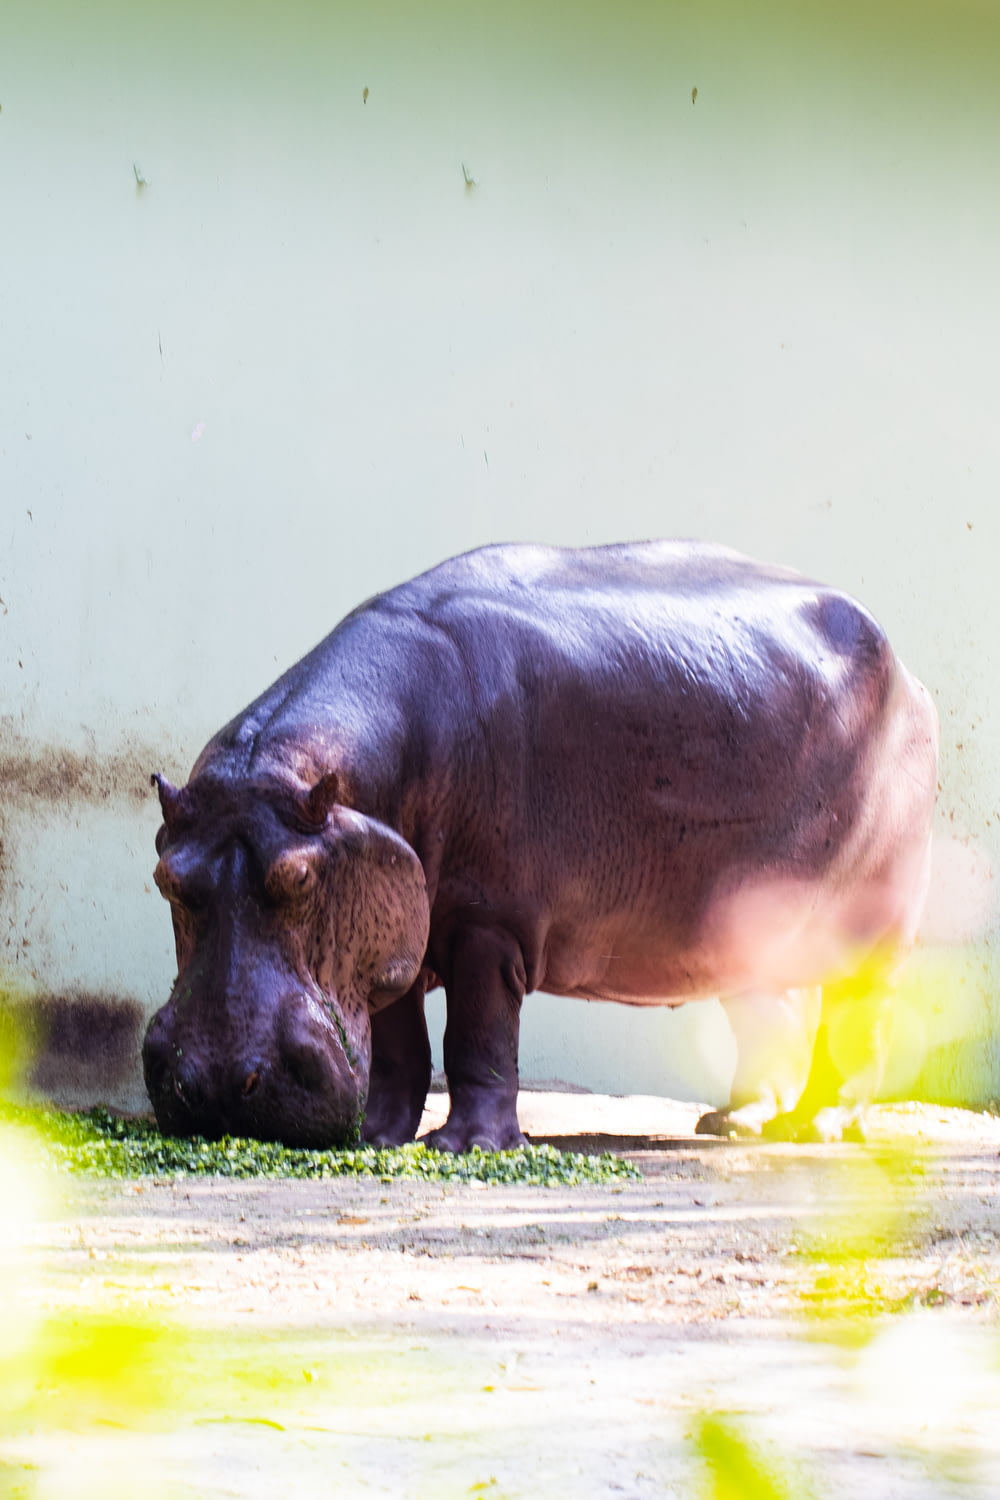 a hippopotamus in a zoo enclosure eating grass